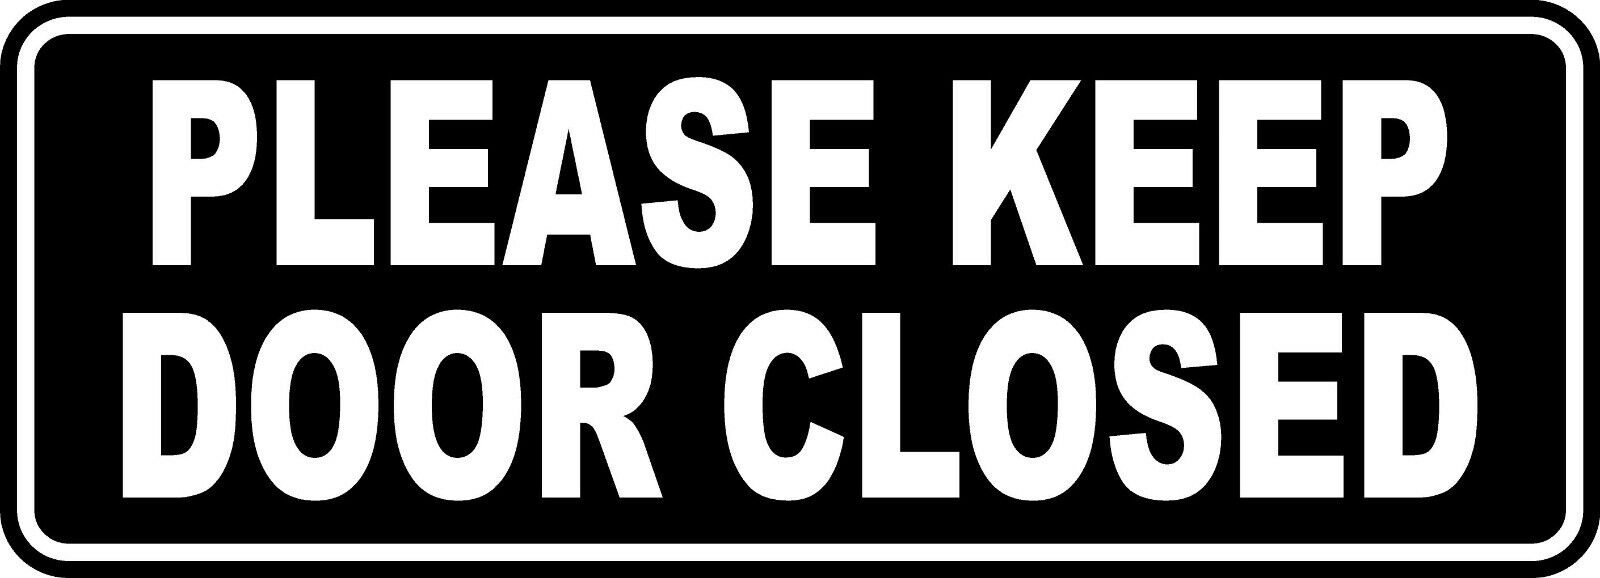 Please keep door closed Sticker Vinyl Business Stickers Decal 3\